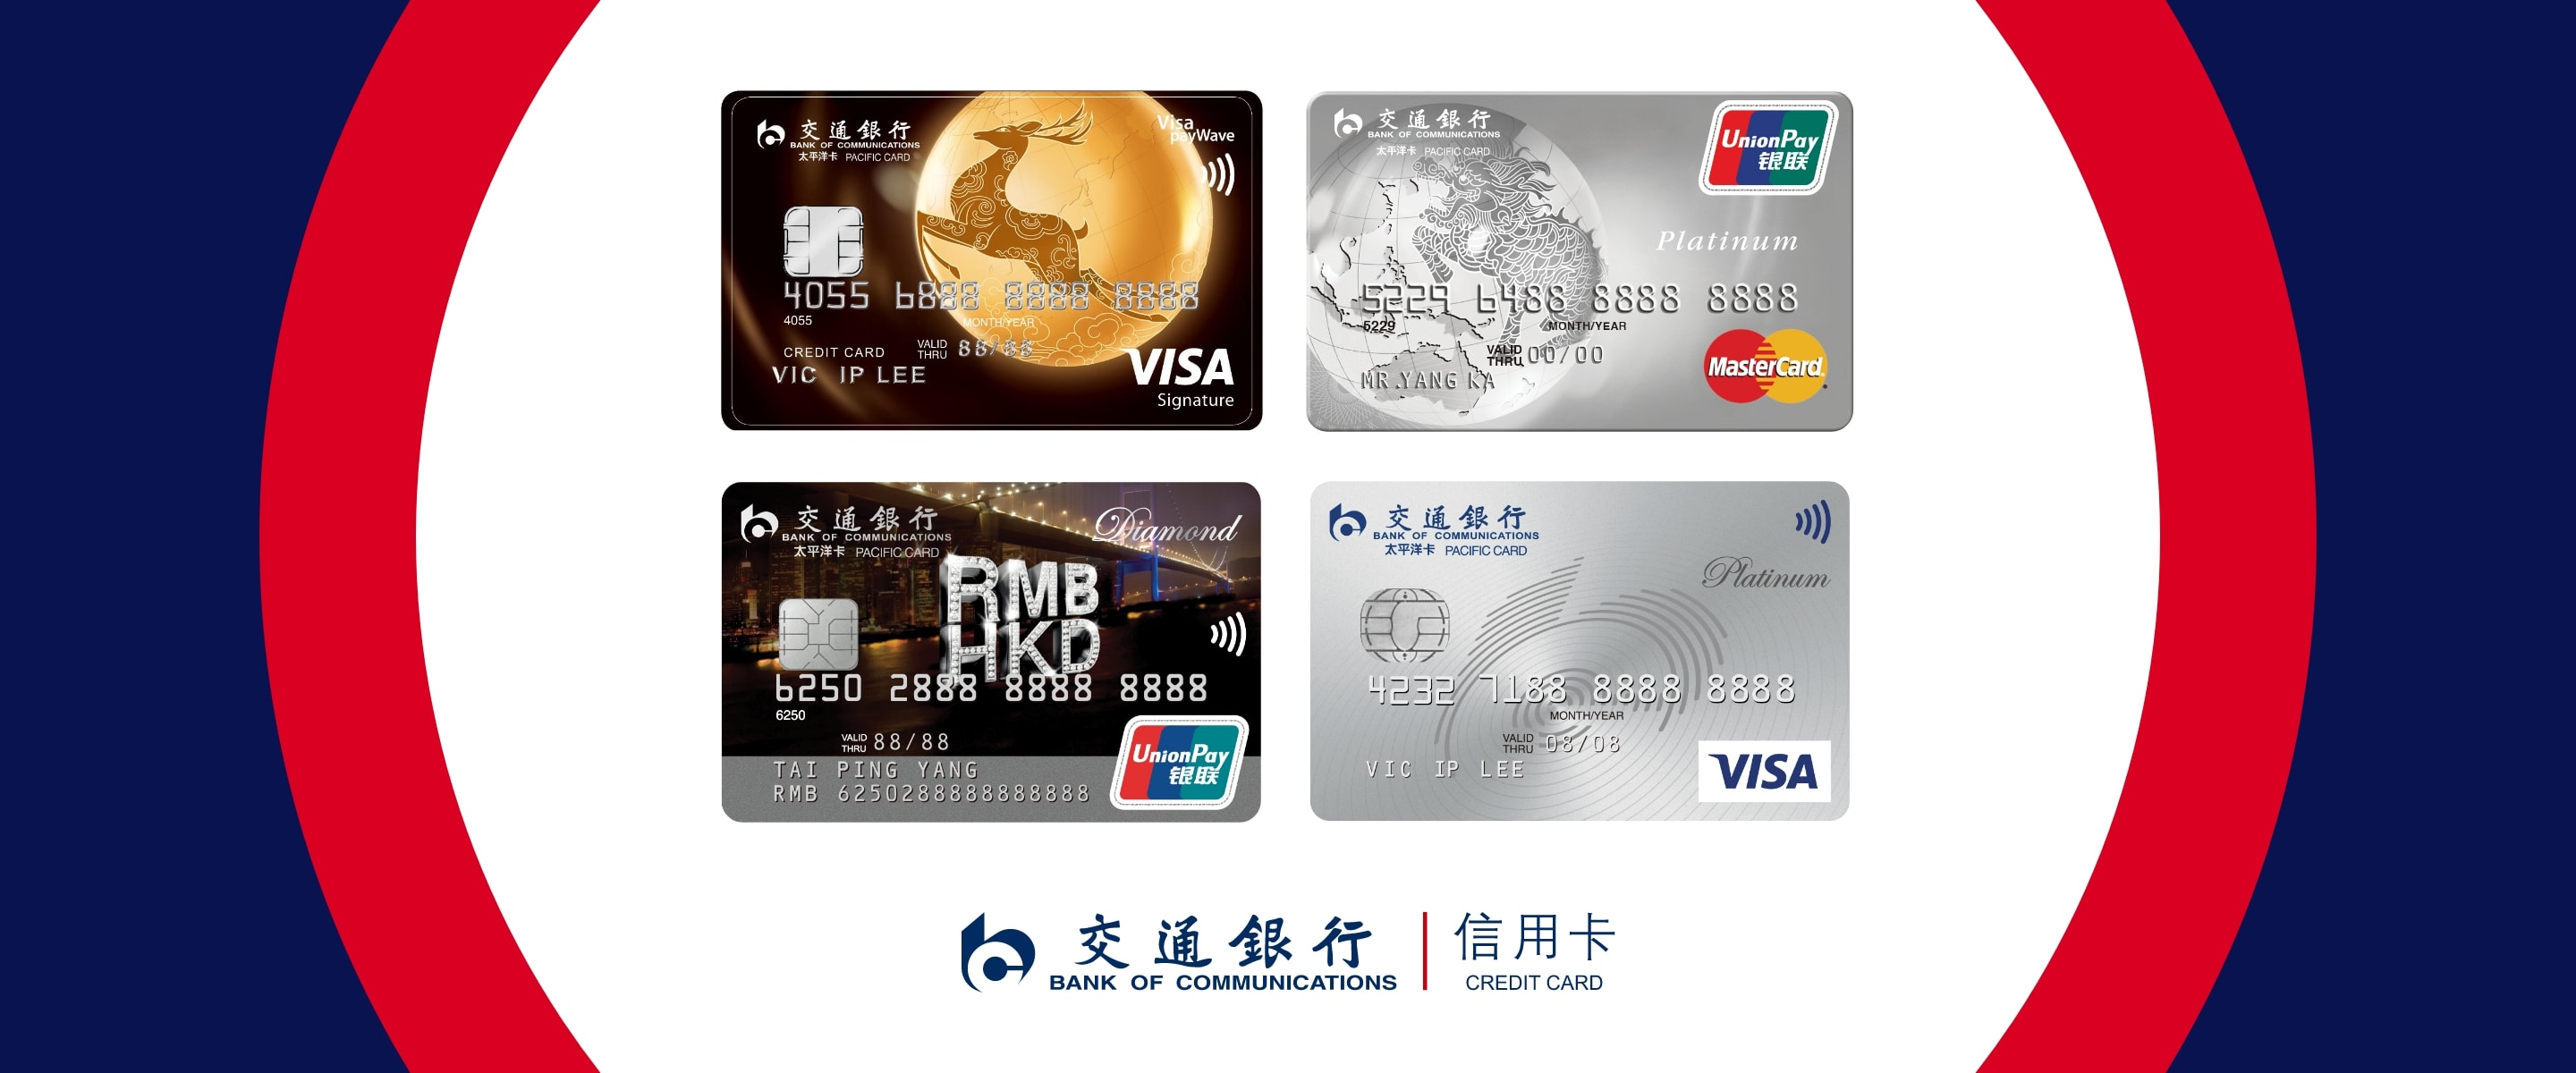 https://asset-lasamcd.dfs.com/image/upload/f_auto/q_auto/v1661236116/dfscom_whats-happening_202209_bocom-credit-card-exclusive-offer_top-banner_desktop_2x.jpg